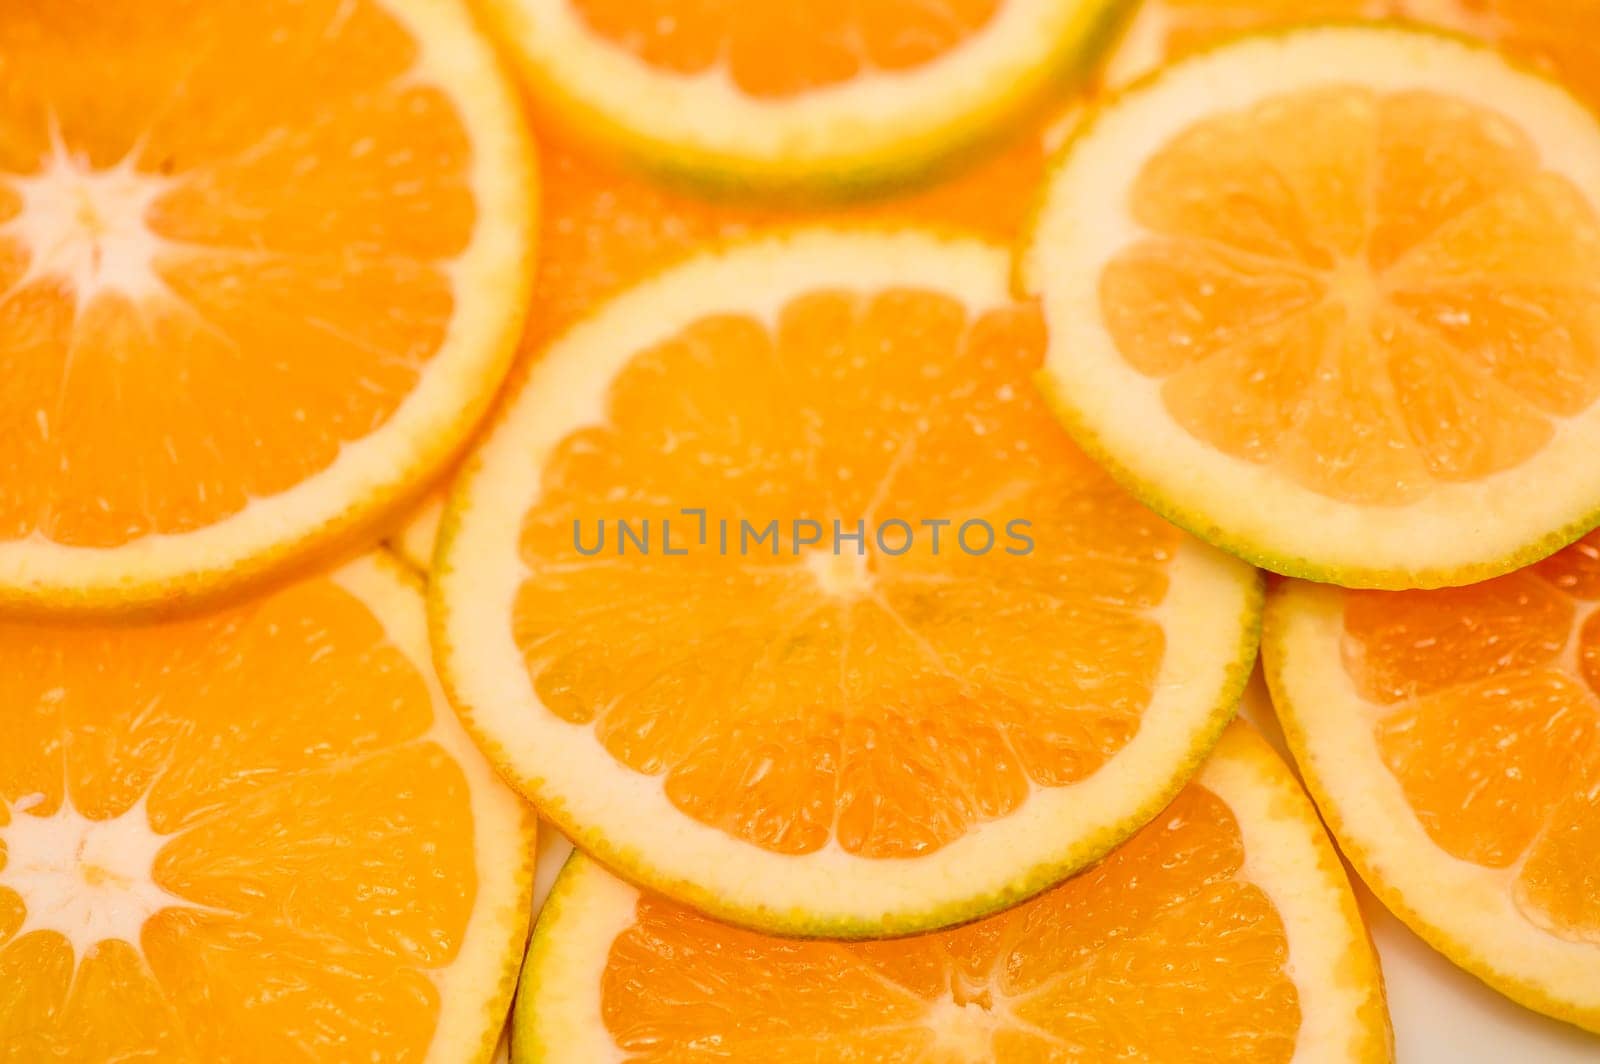 Closeup of sliced juicy oranges textured background 1